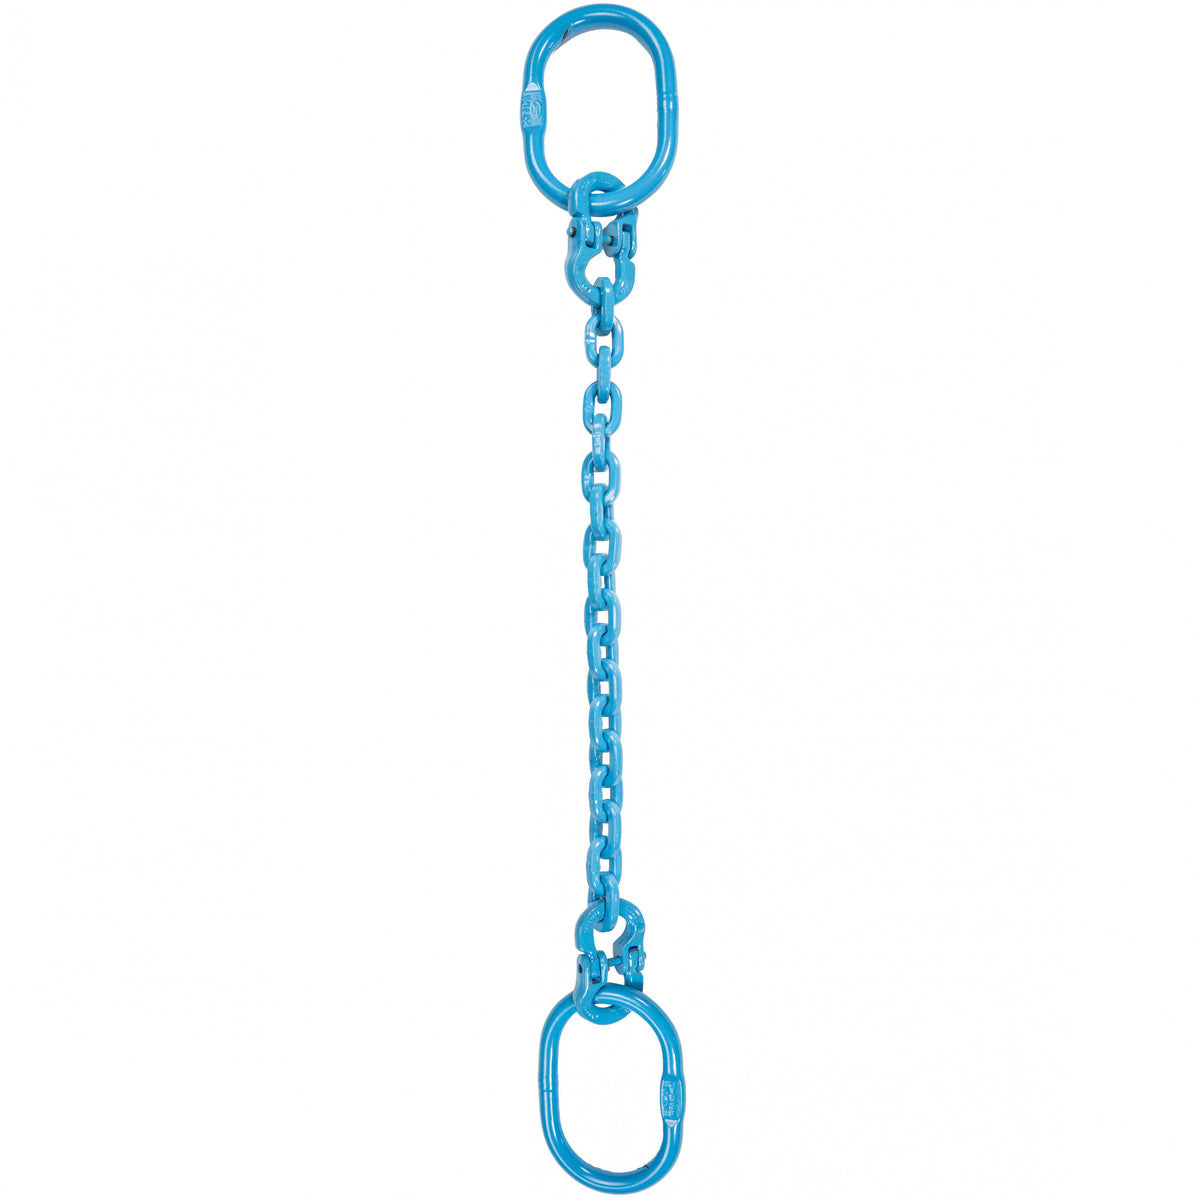 9/32" x 8' - Pewag Single Leg Chain Sling w/ Oblong Master Links - Grade 120